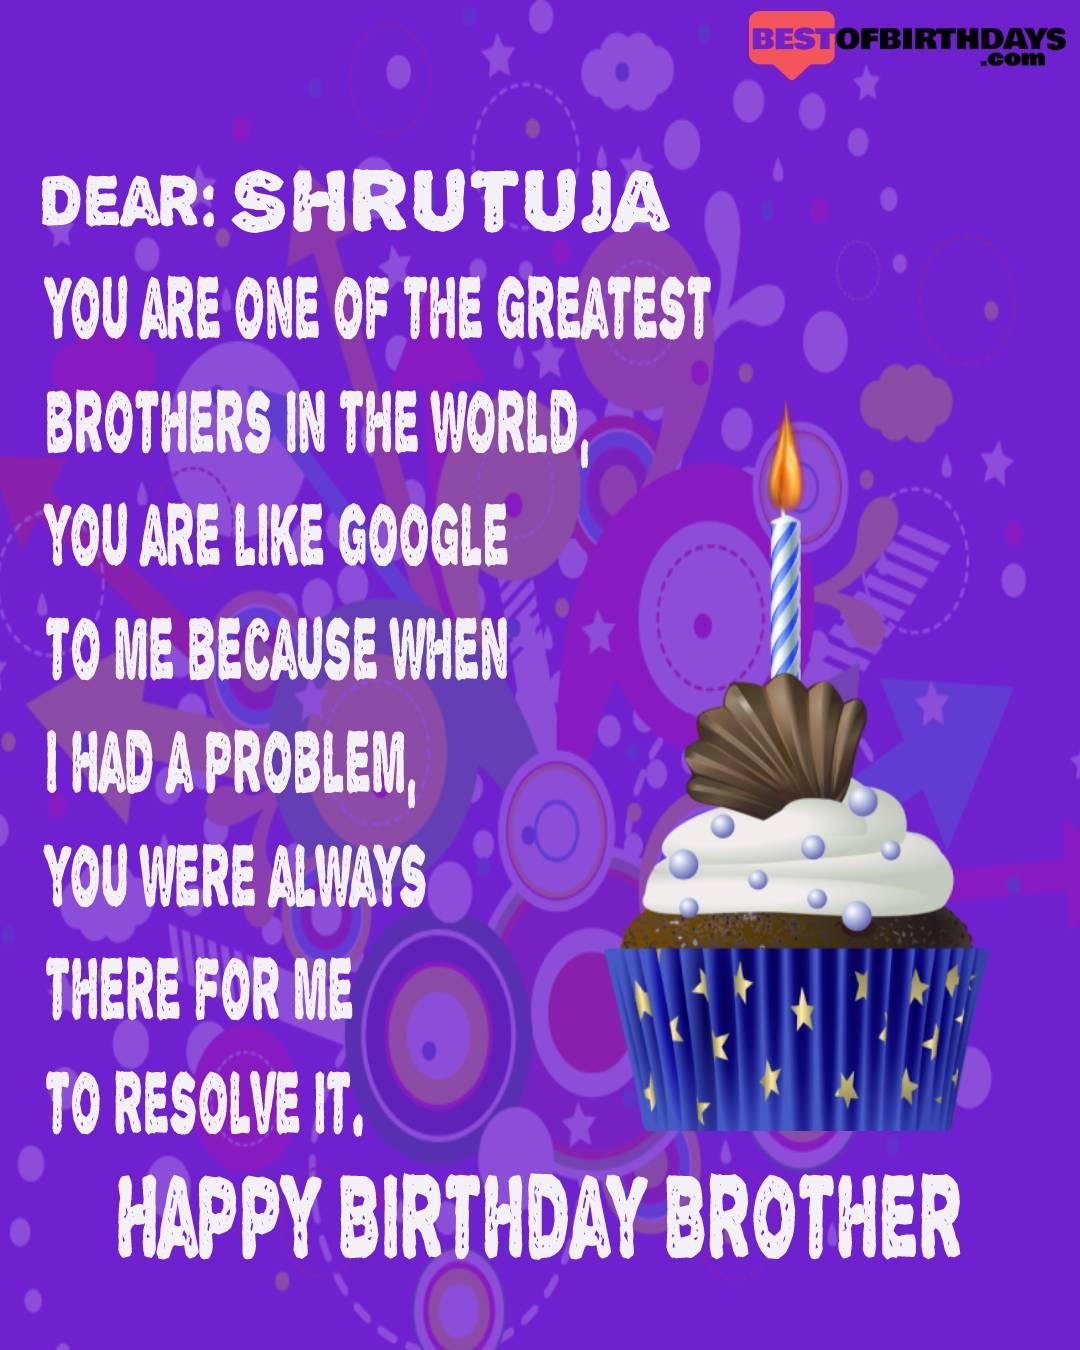 Happy birthday shrutuja bhai brother bro